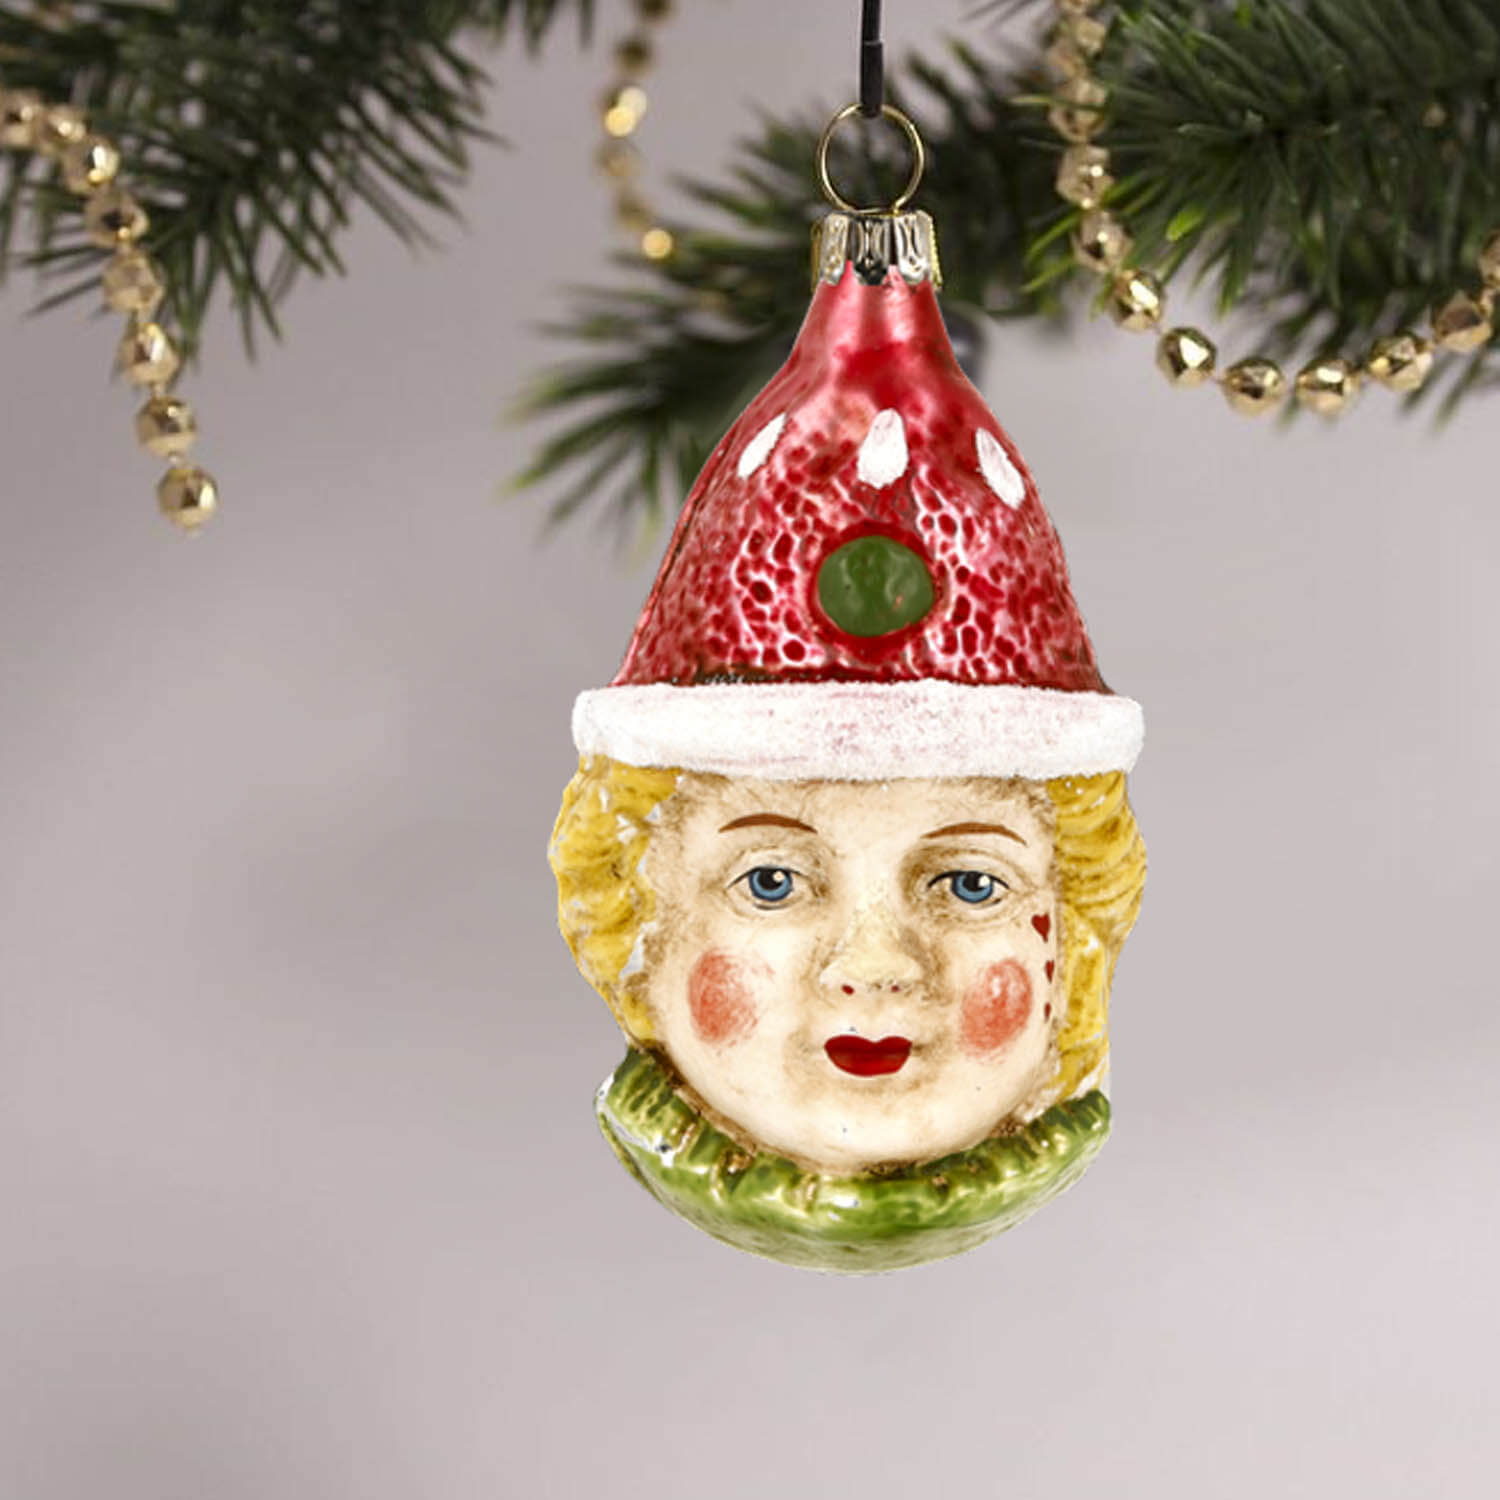 MAROLIN® - Glass ornament "Clown with red hat"